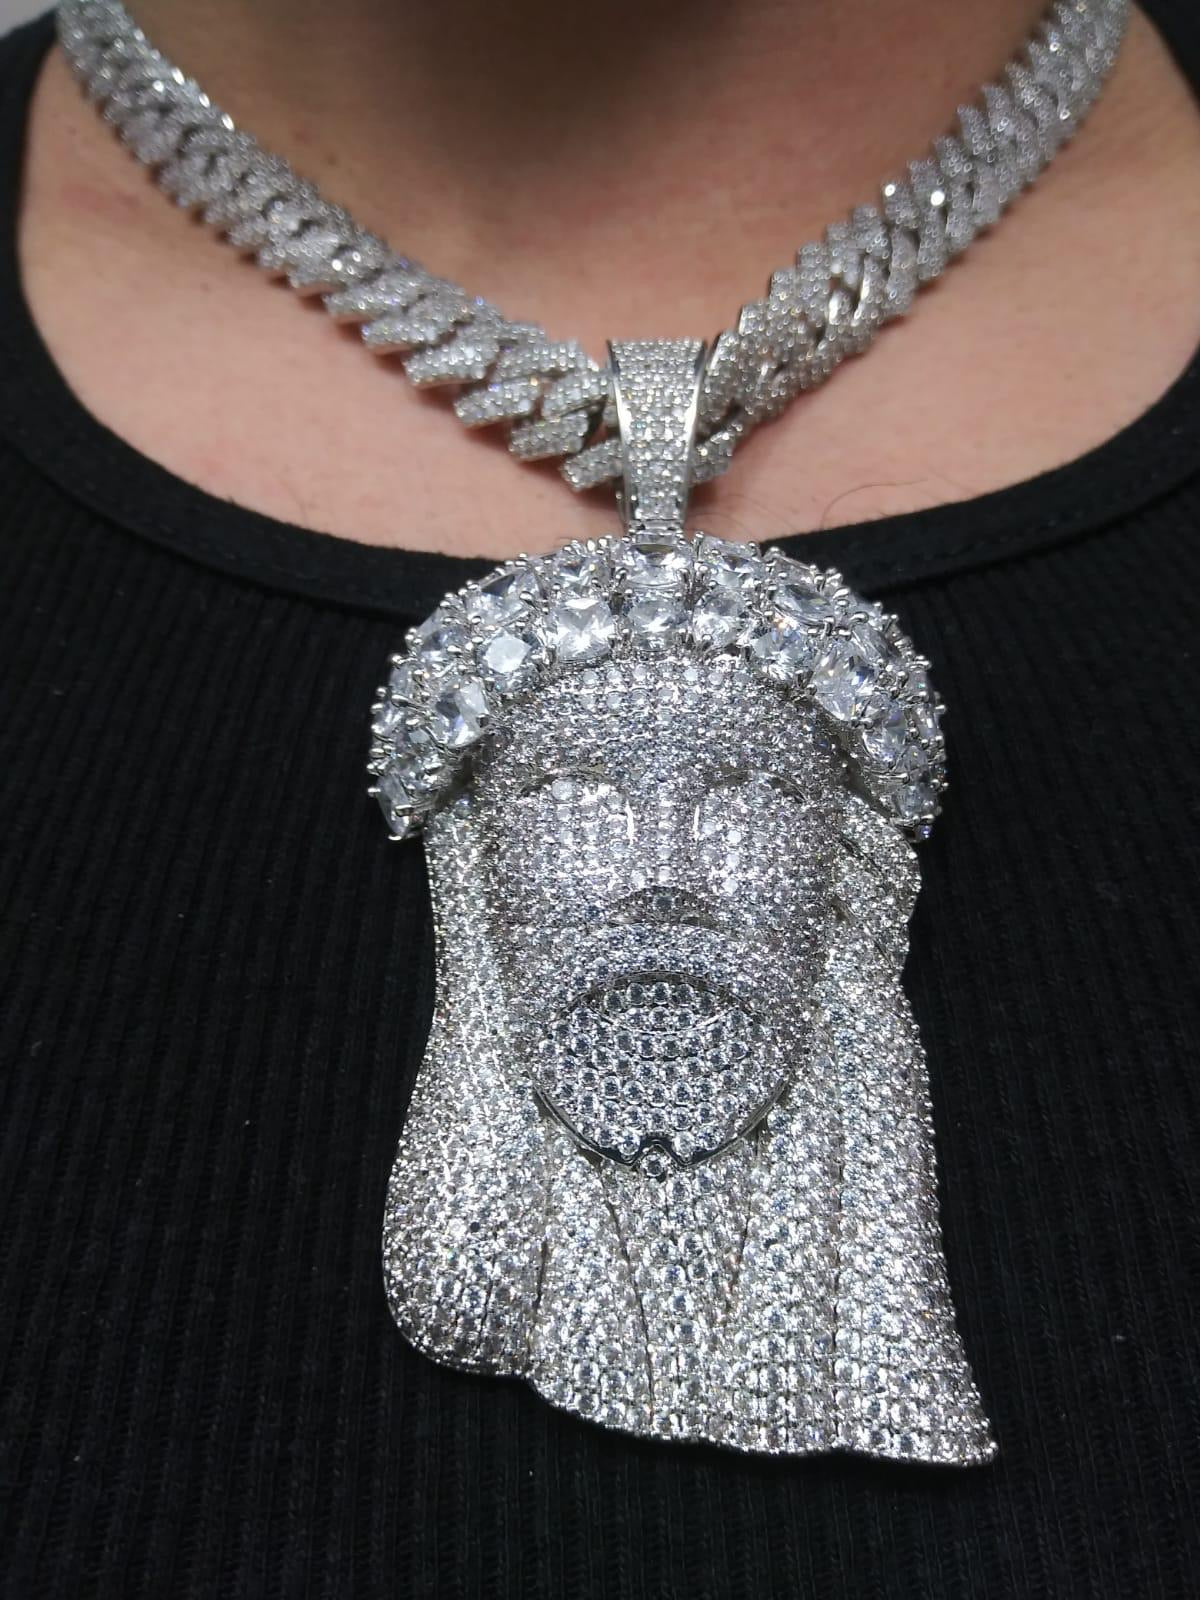 Chain and Jesus pendant